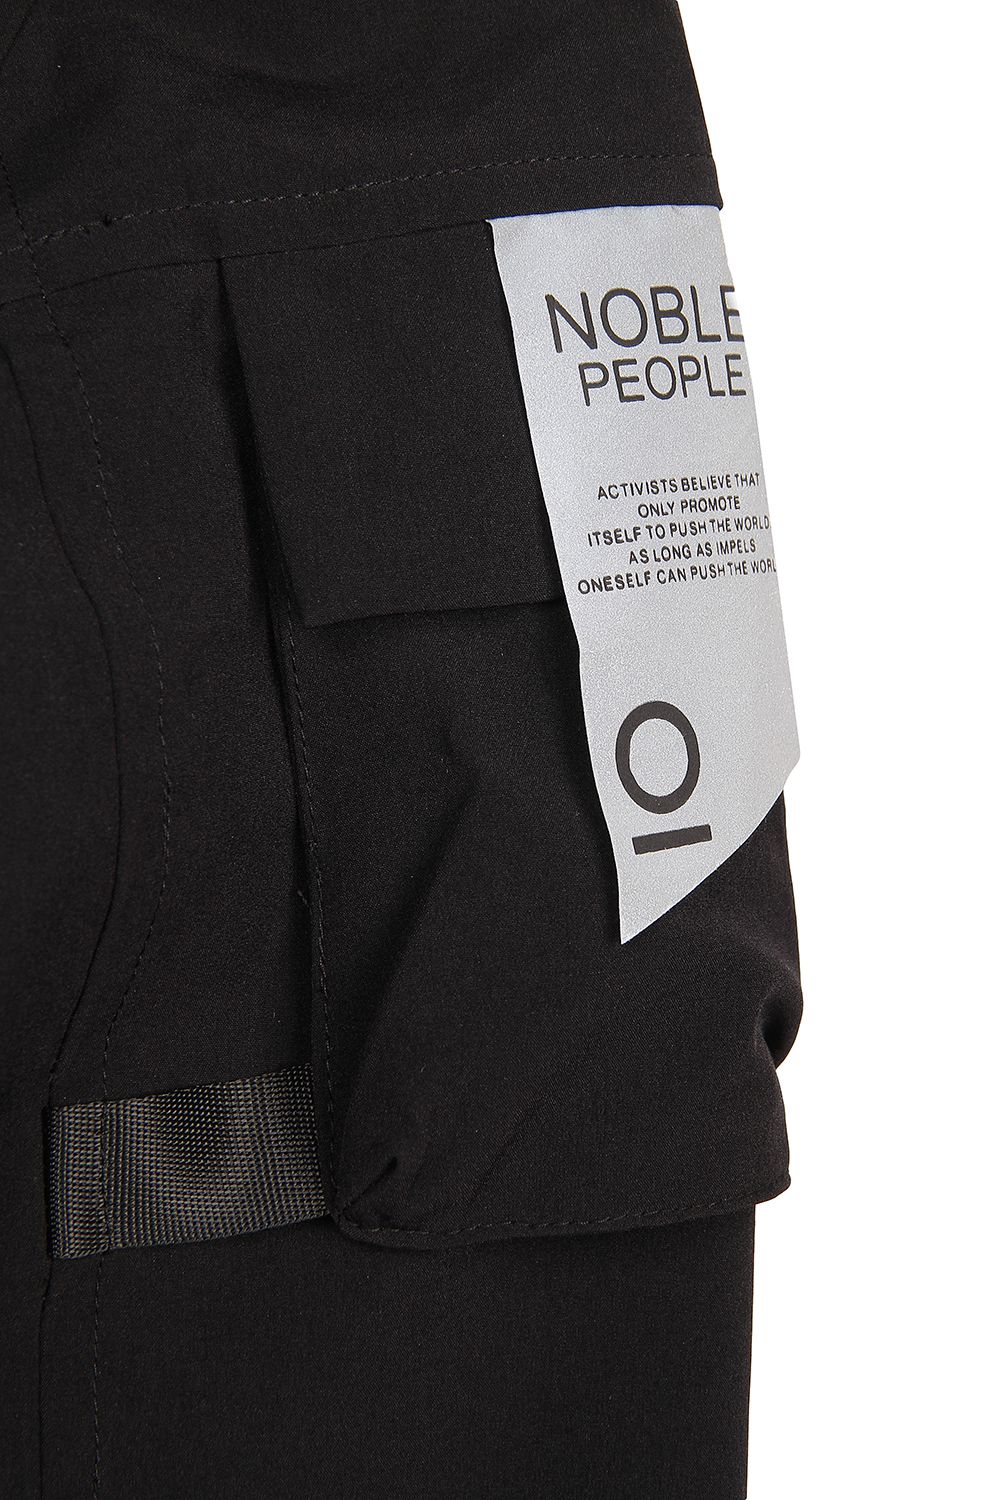 Куртка Noble People, размер 122, цвет черный 18607-520 - фото 4